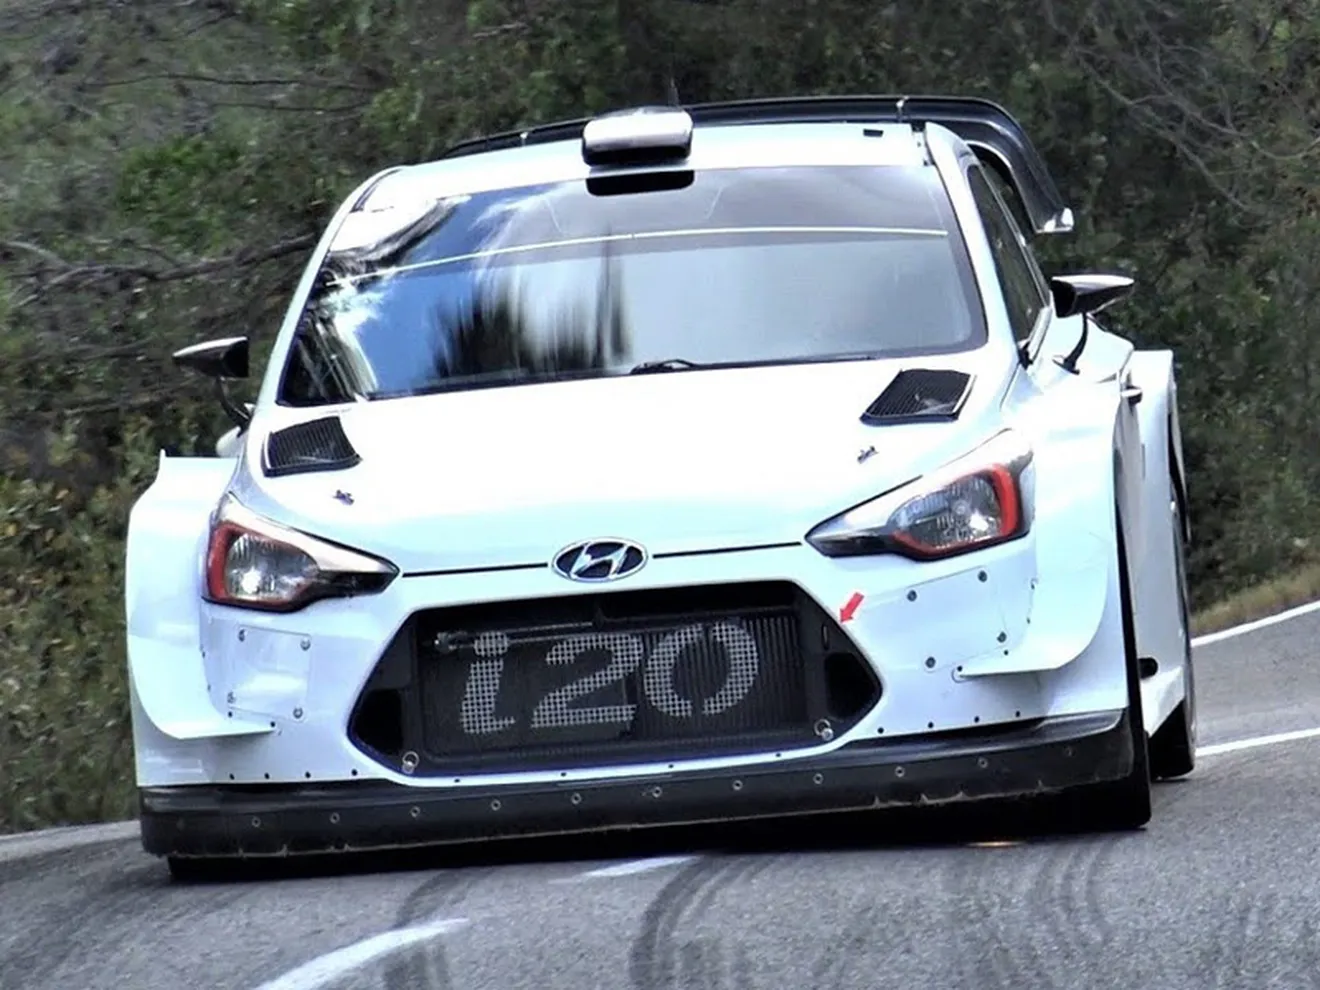 Hyundai gasta dos jokers en el i20 WRC Coupé